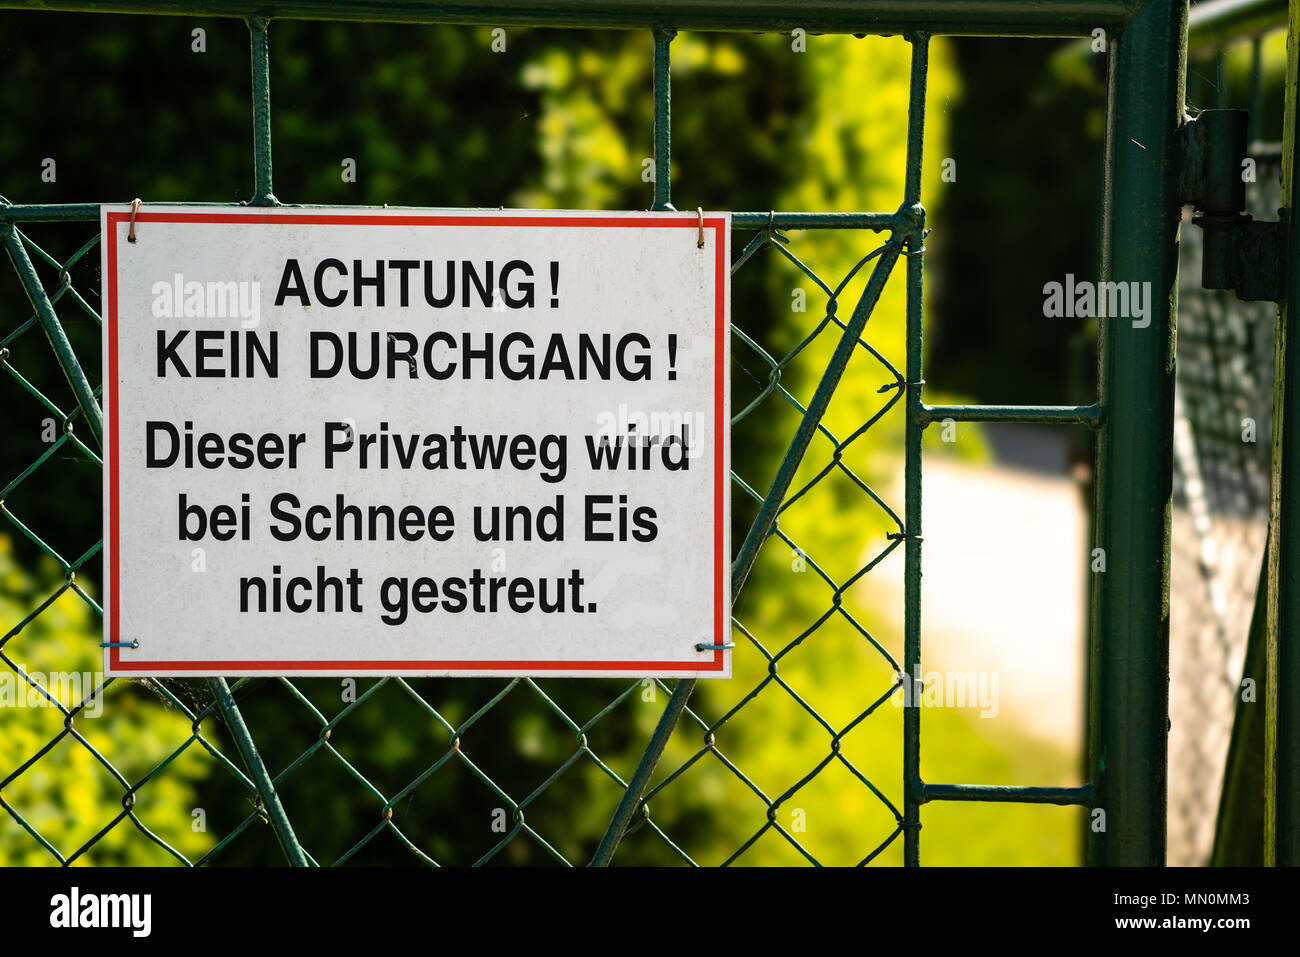 Attention - no entry allowed - no winter services - Achtung - kein Durchgang - Eis und Schnee Stock Photo